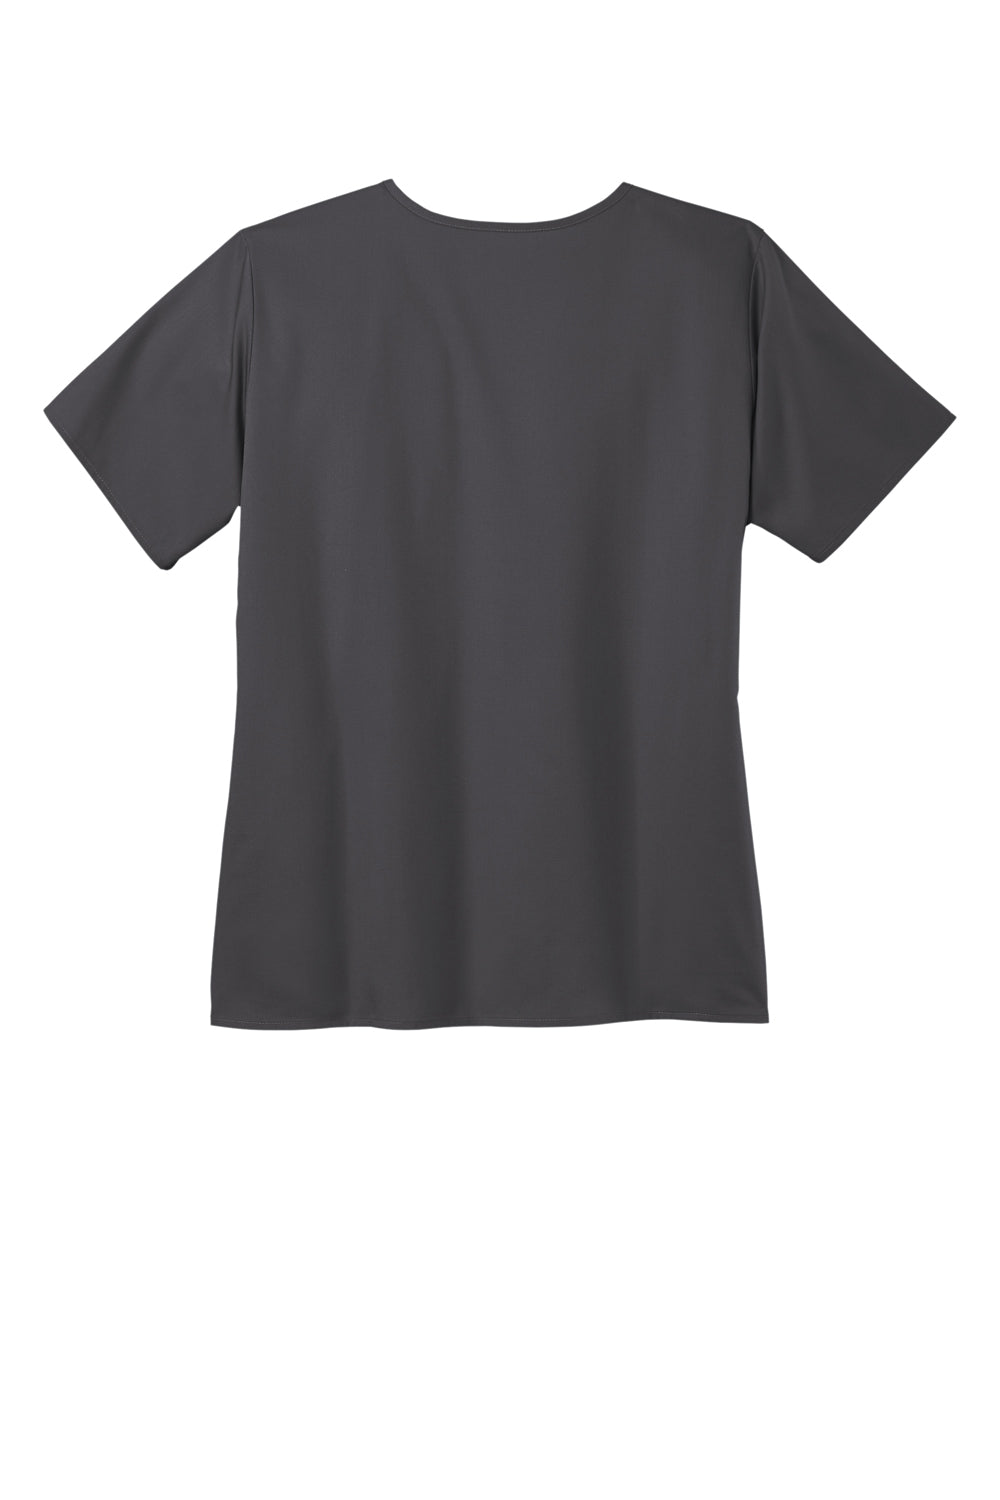 Wonderwink WW4760 WorkFlex Short Sleeve V-Neck Mock Wrap Shirt Pewter Grey Flat Back